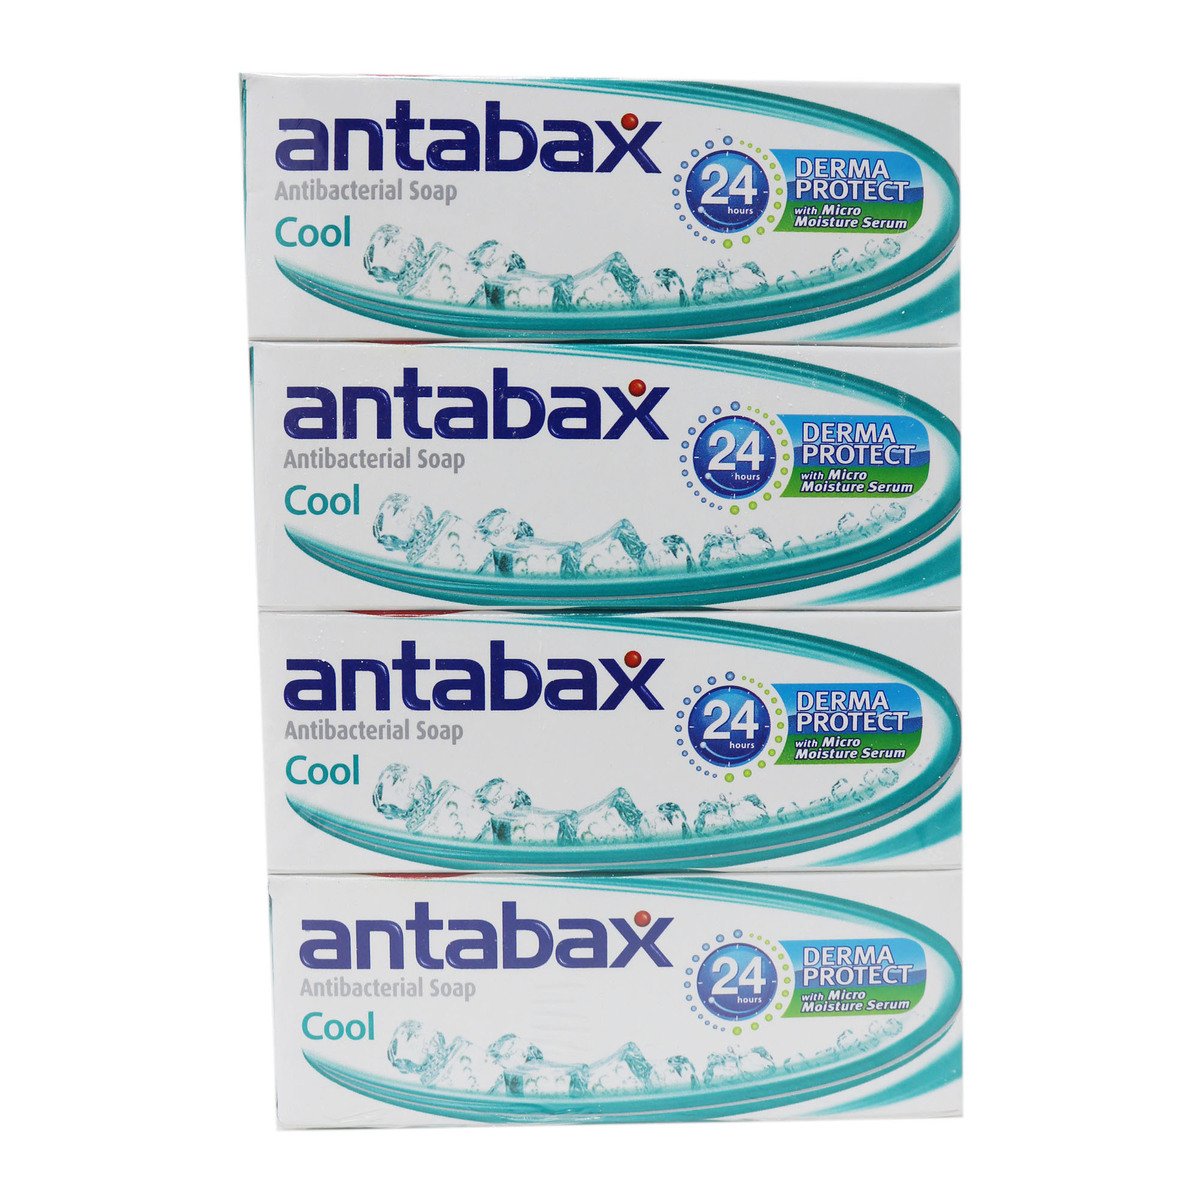 Antabax Bath Soap Cool 4 x 85g